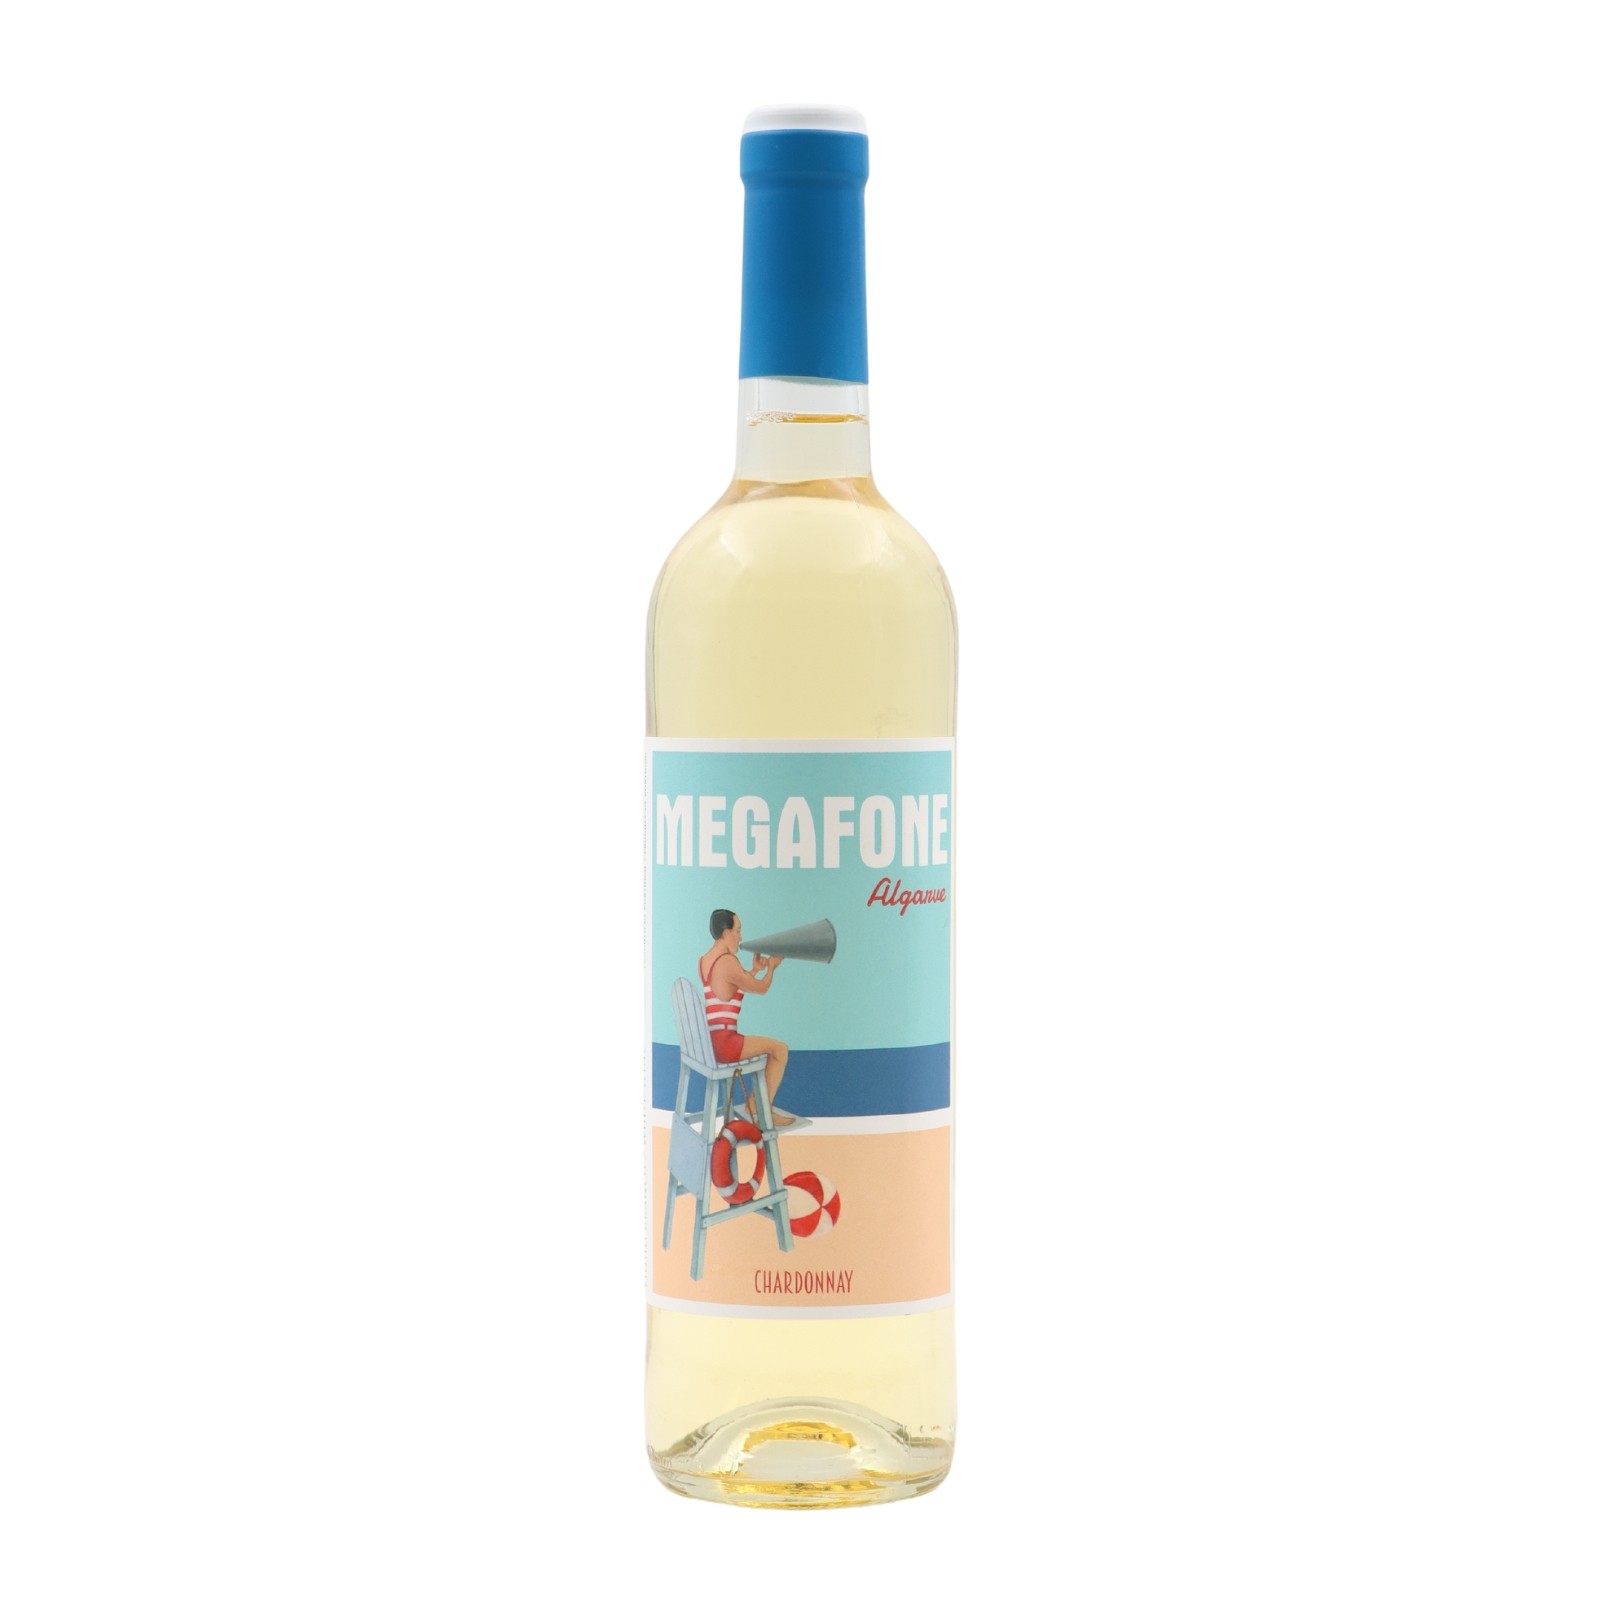 Megafone Chardonnay Branco 2021